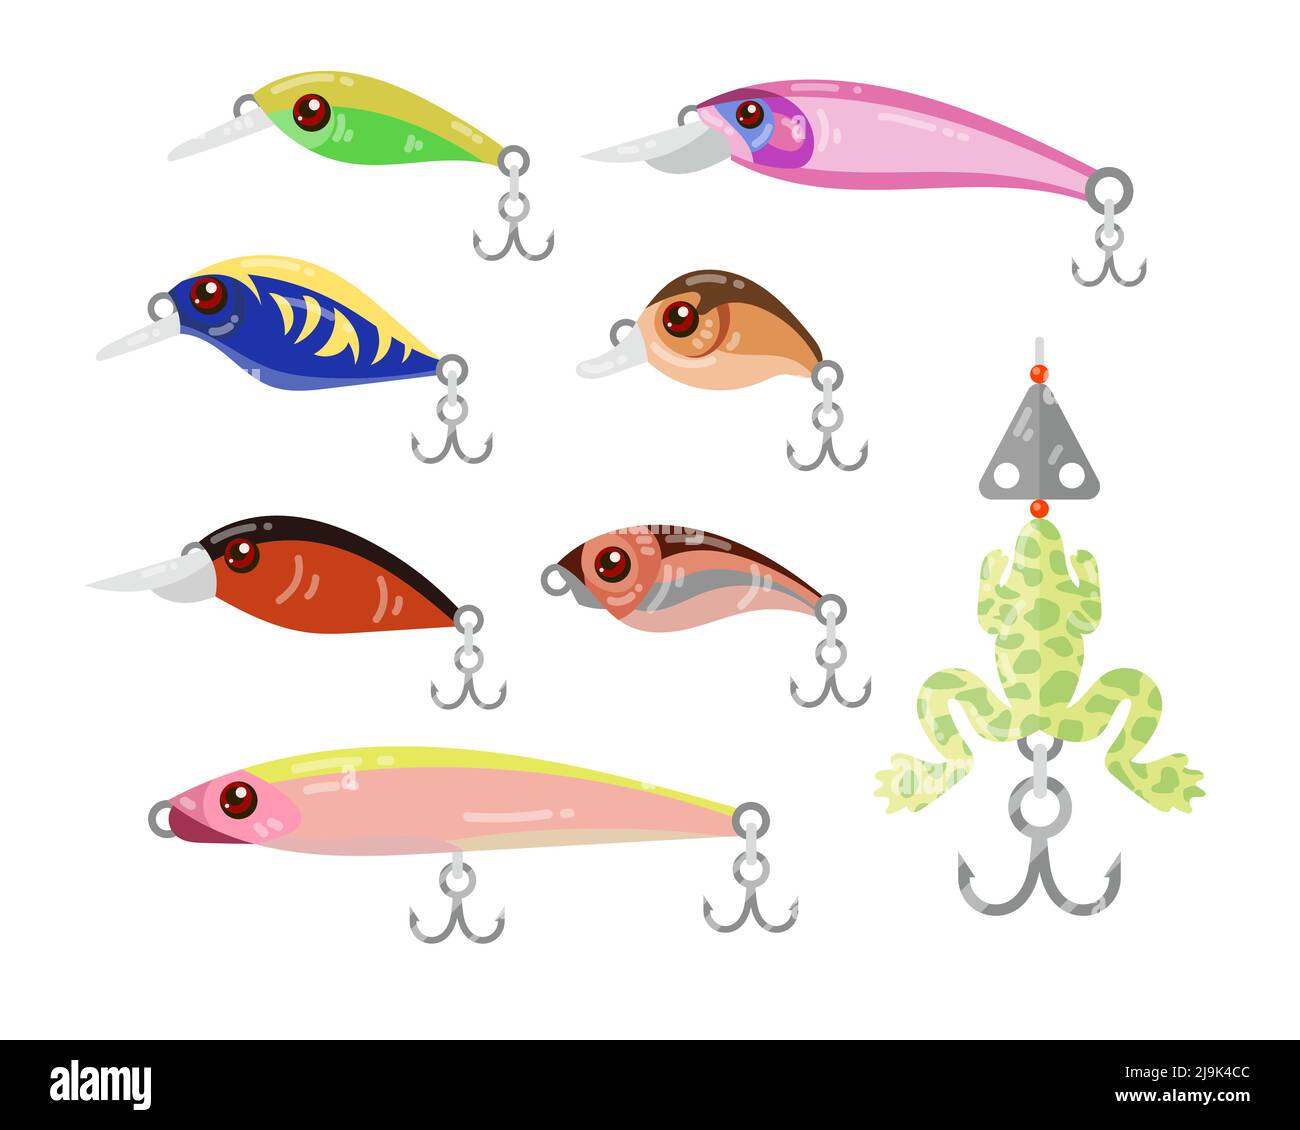 Artificial fishing bait cartoon illustration set. Fishing lures